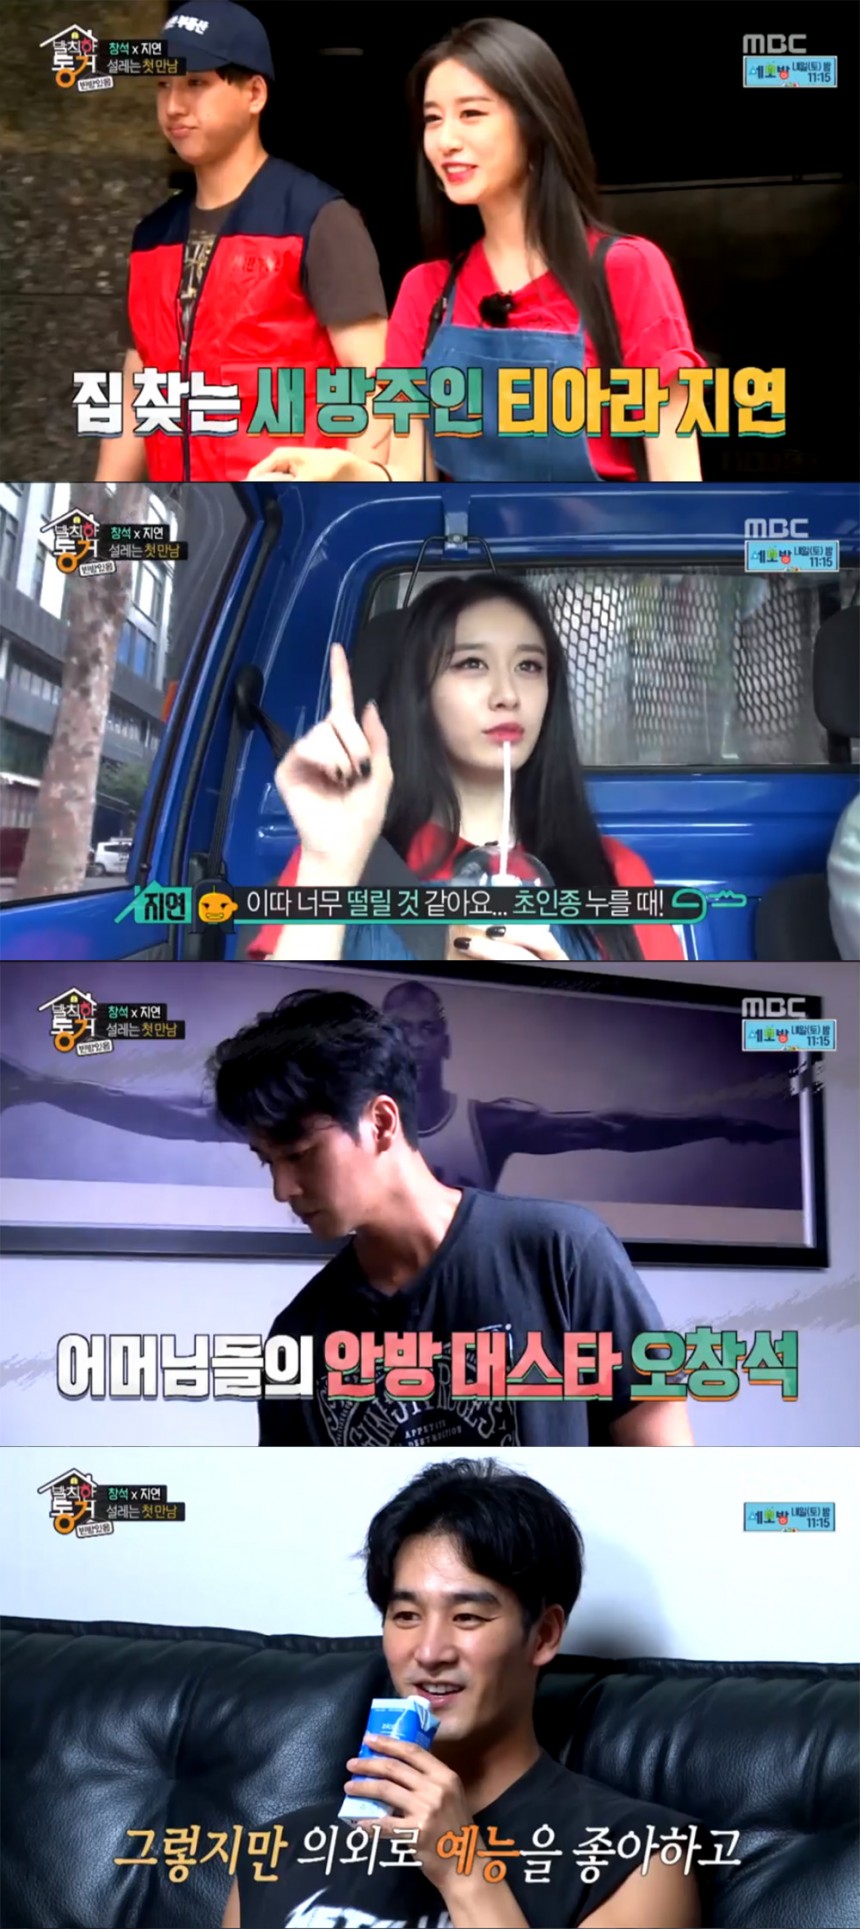 MBC ‘발칙한 동거 빈방 있음’ 방송화면 캡처